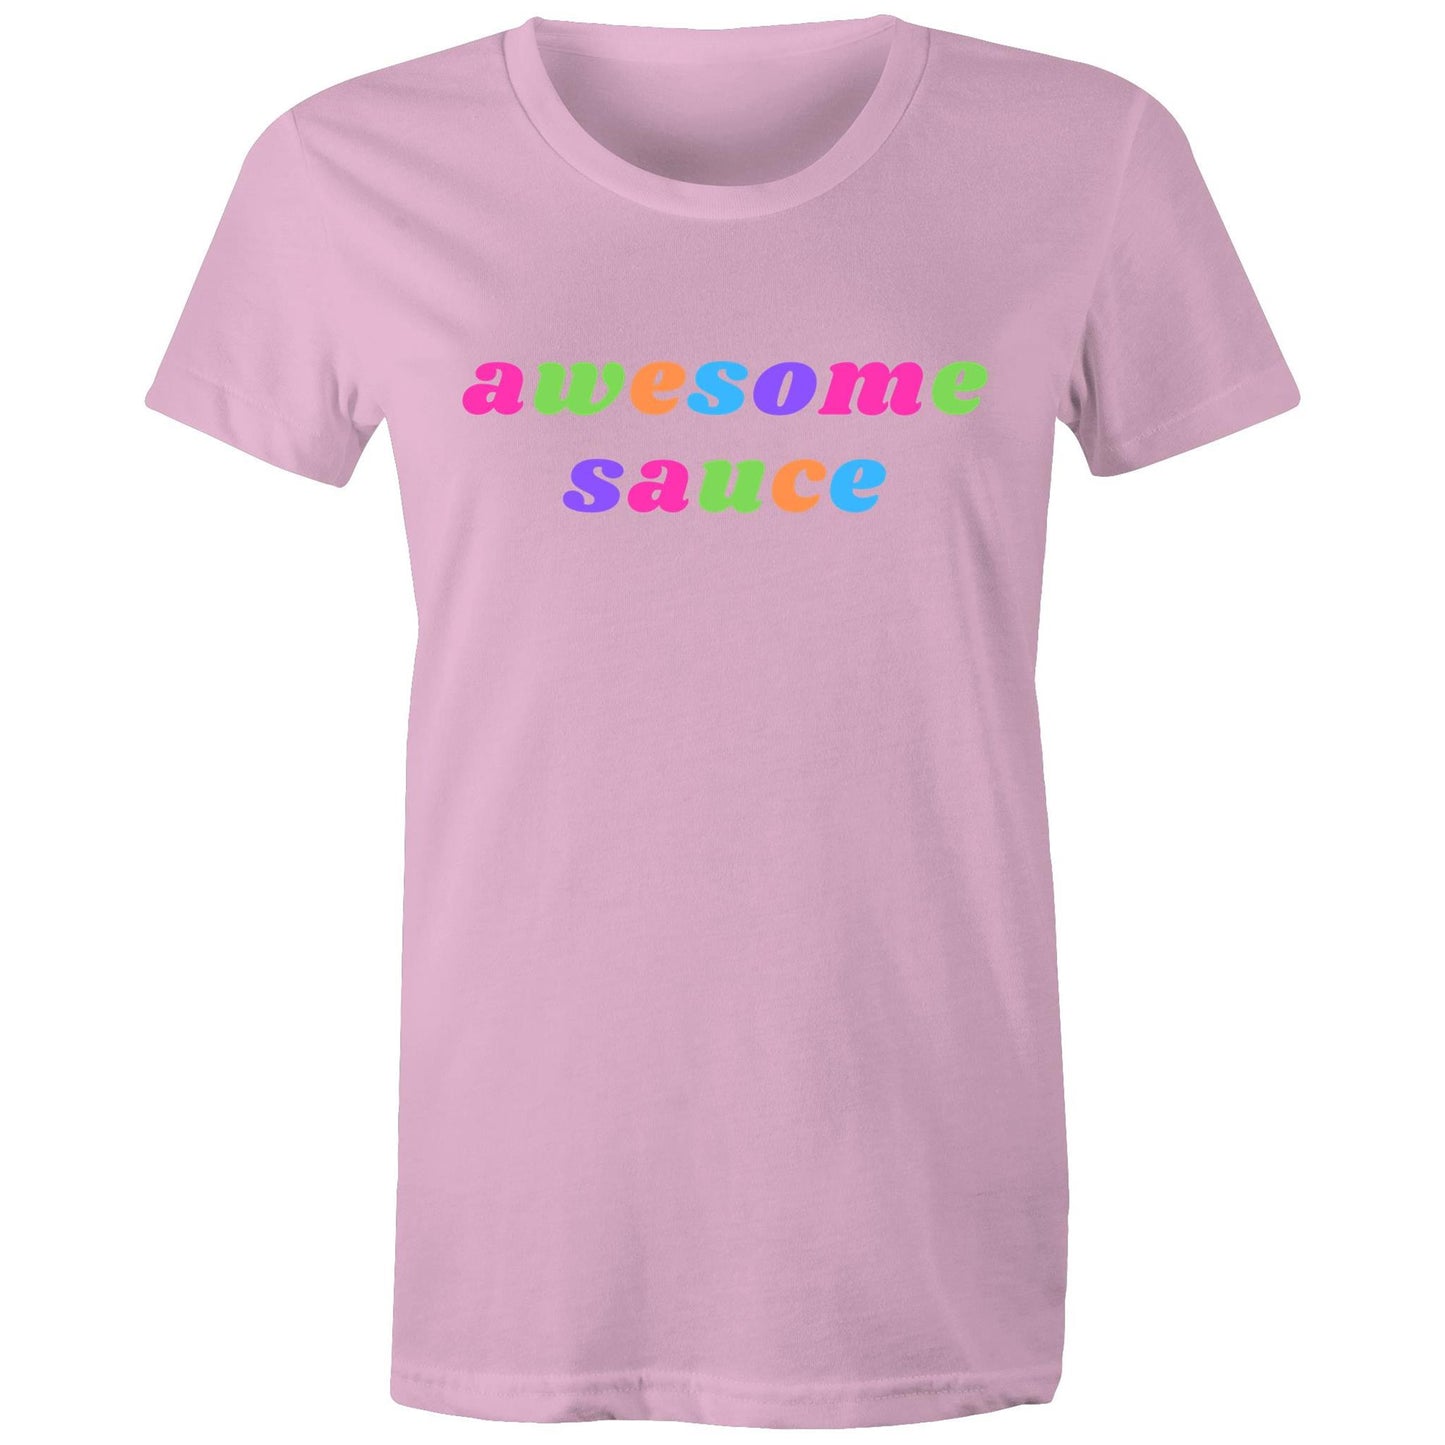 Awesome Sauce - Women's T-shirt Pink Womens T-shirt Funny Womens